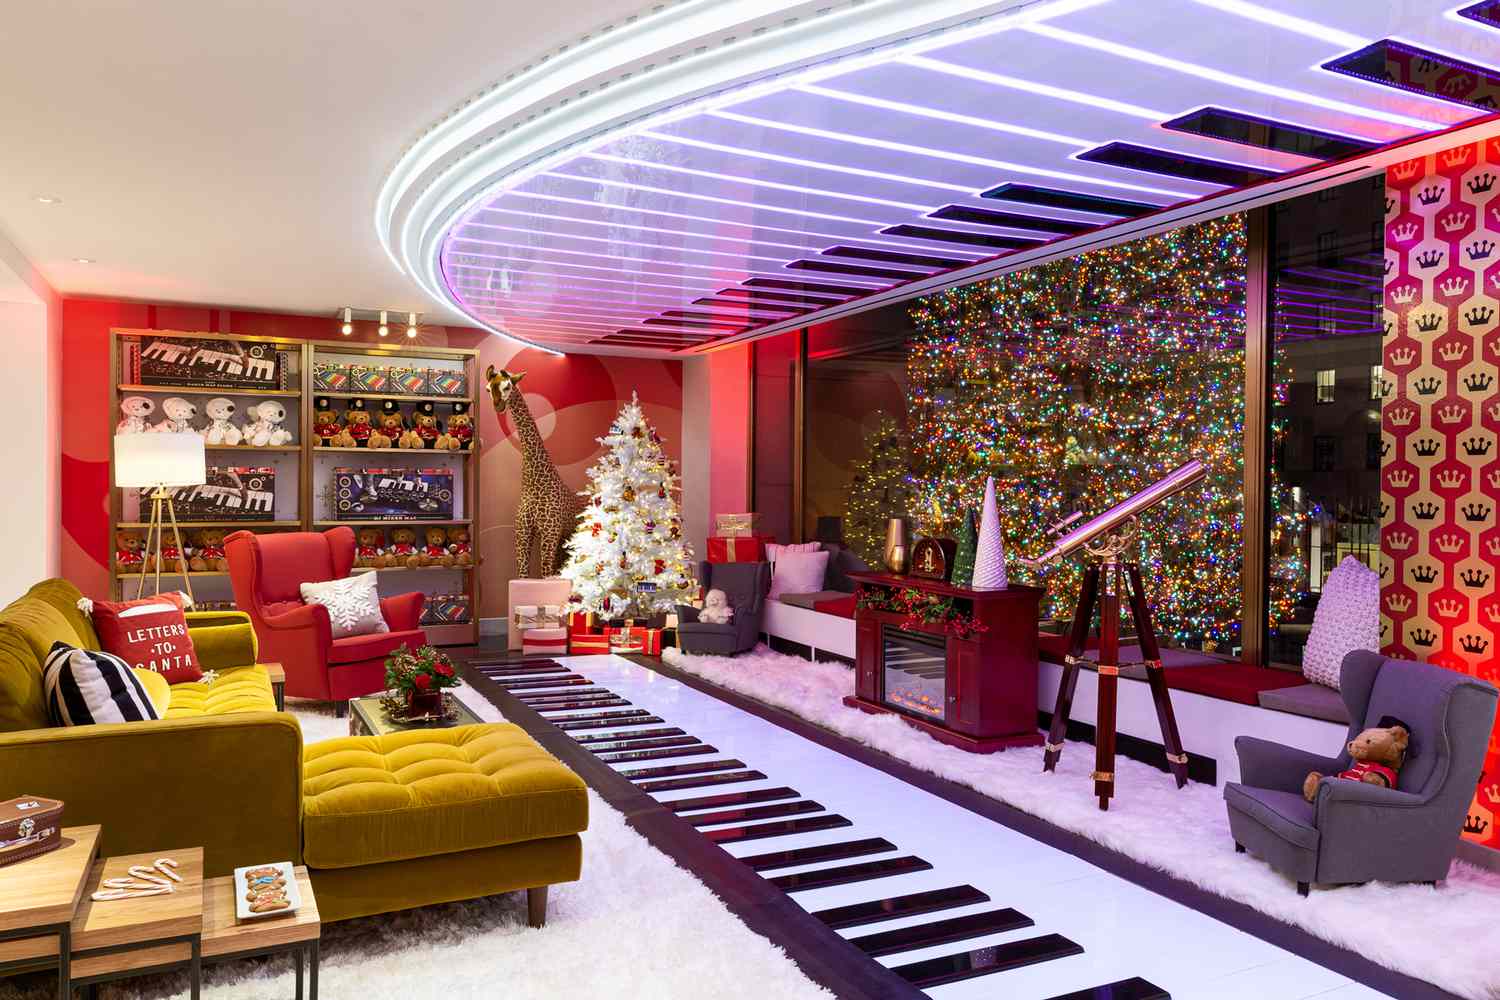 inside of fao schwarz, giant floor piano and christmas tree